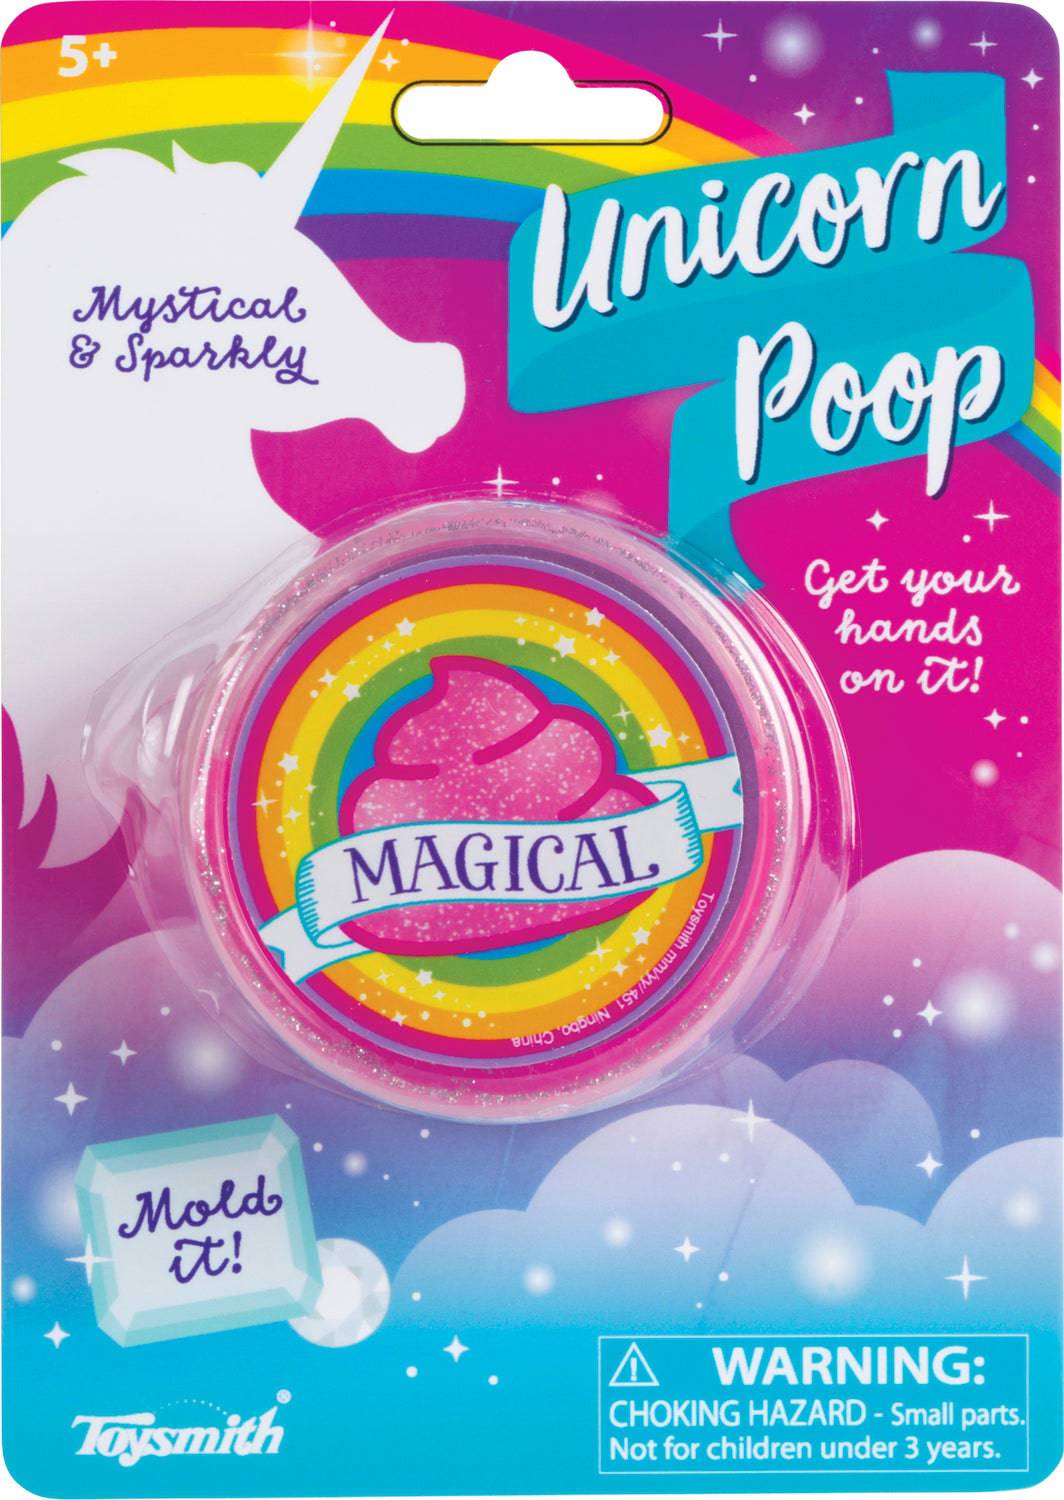 Unicorn Poop - A Child's Delight